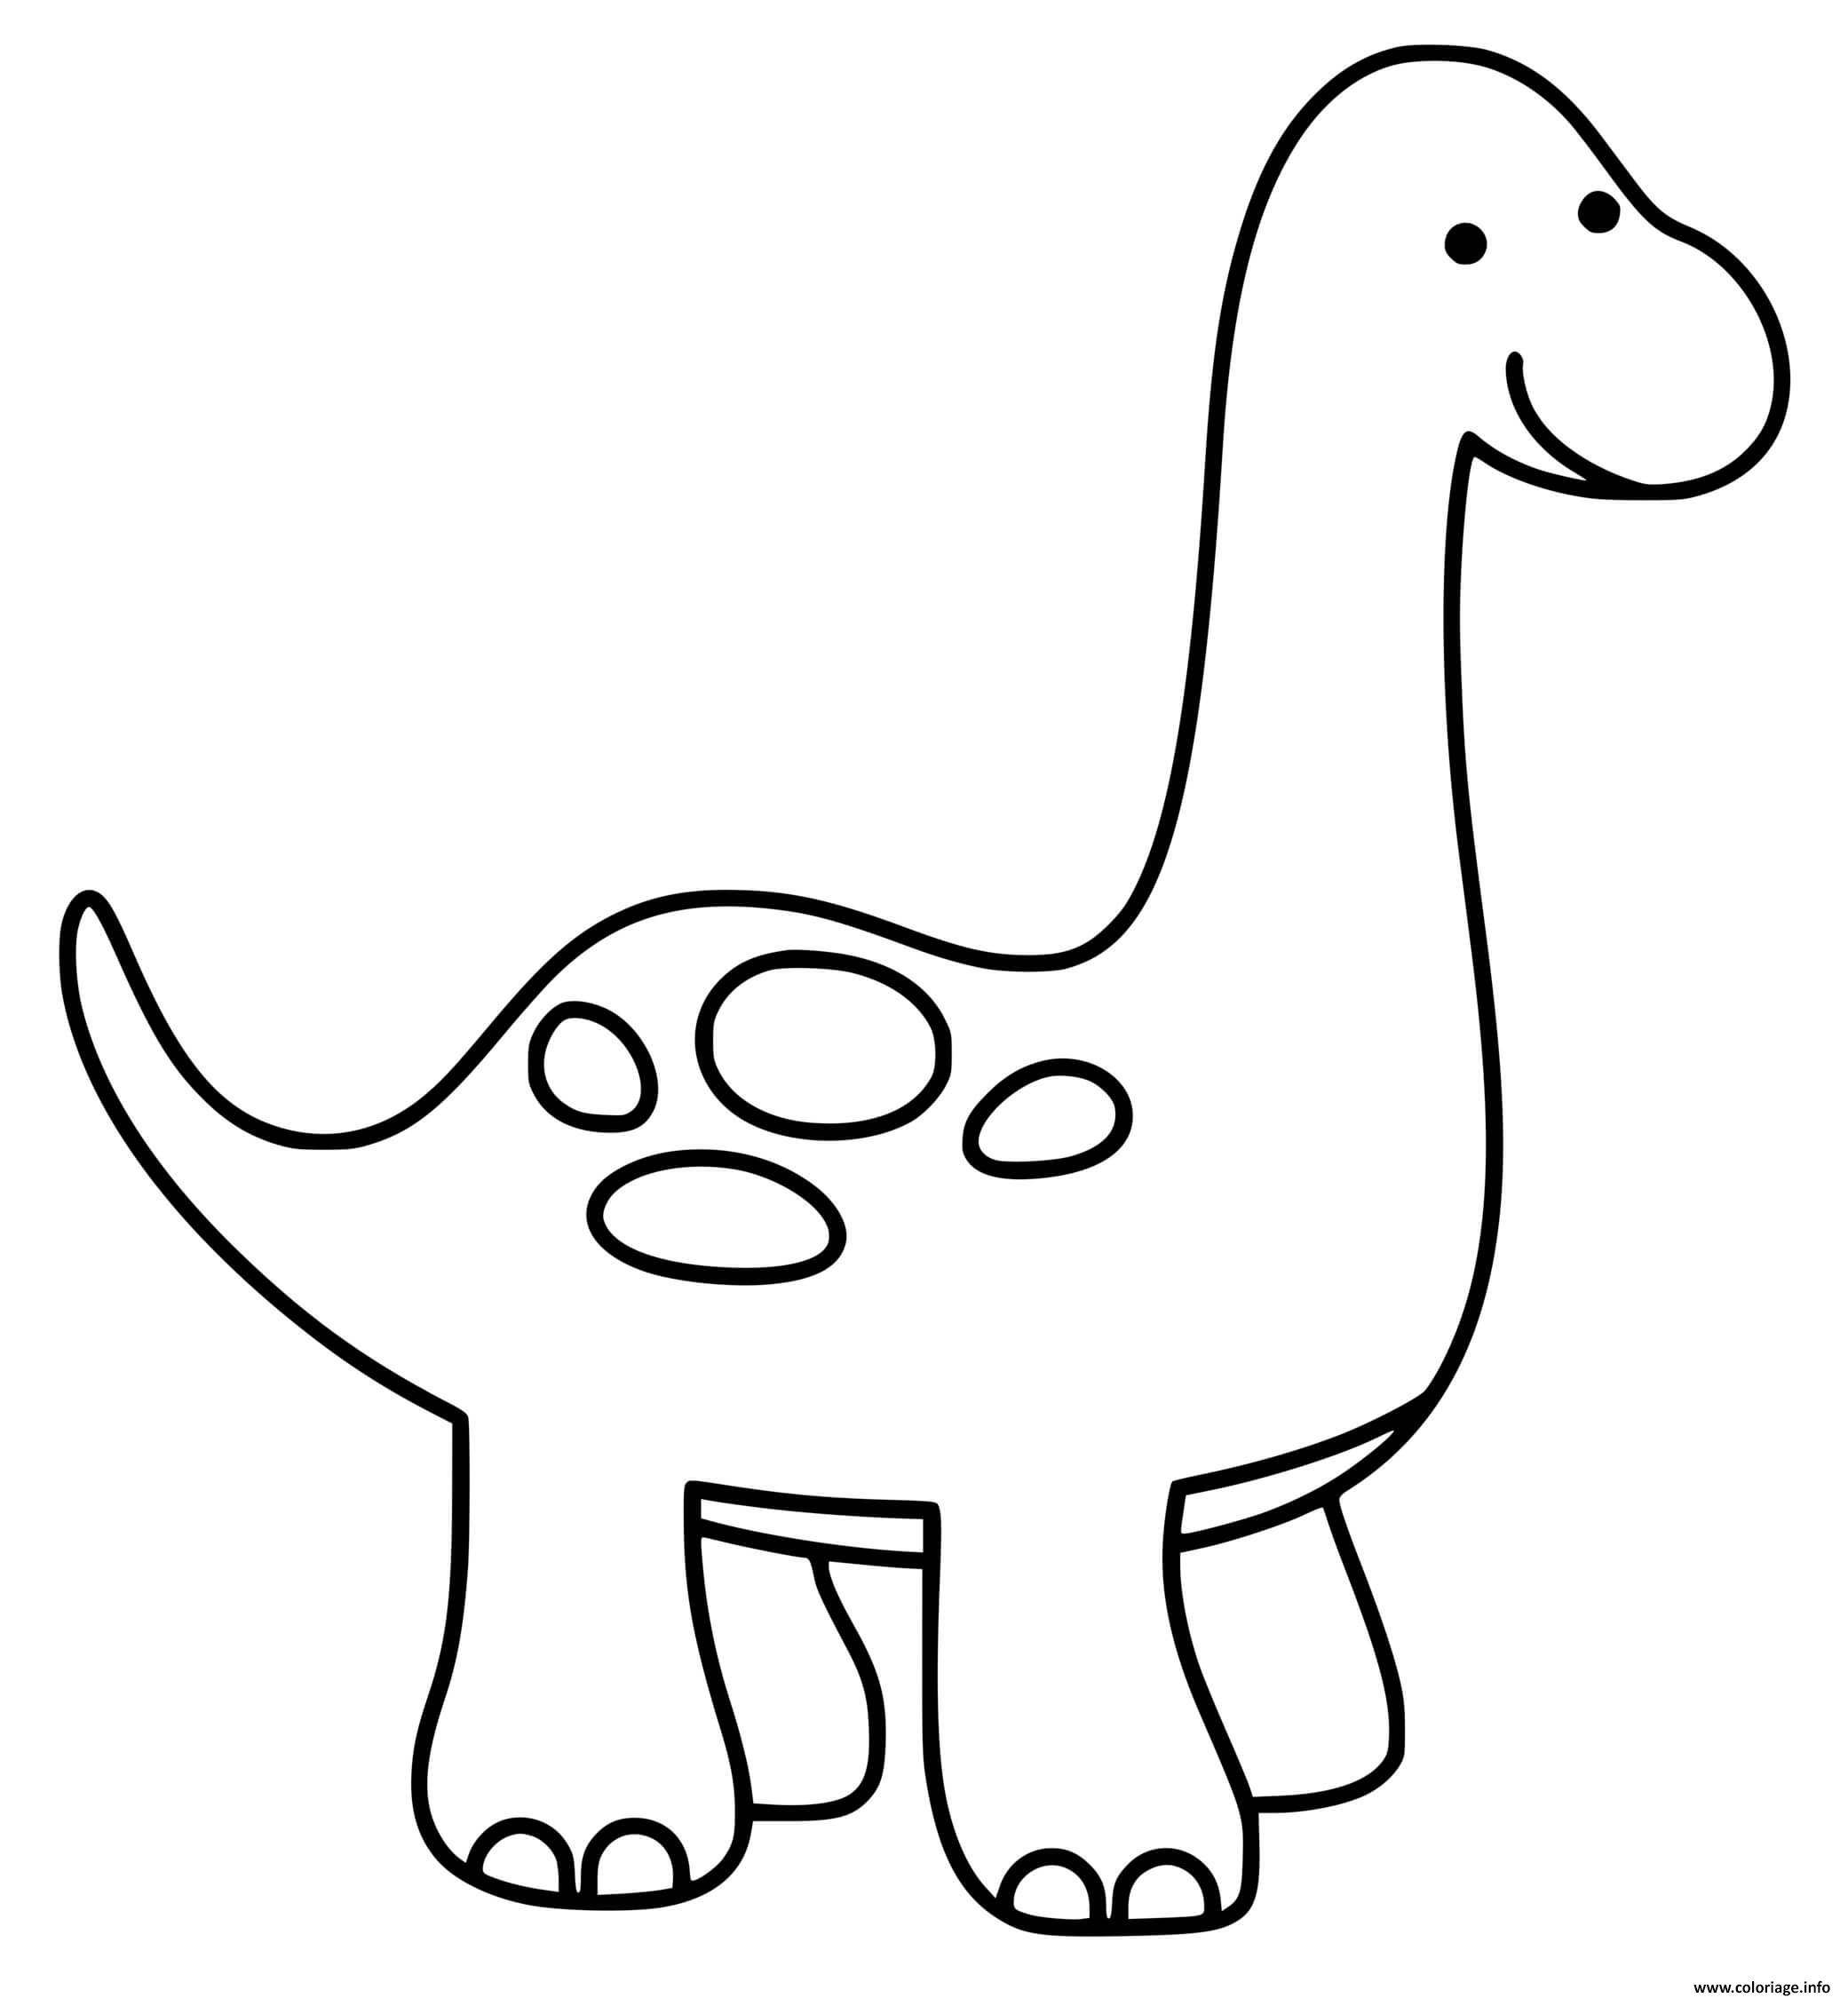 Dessin dinosaure facile simple Coloriage Gratuit à Imprimer